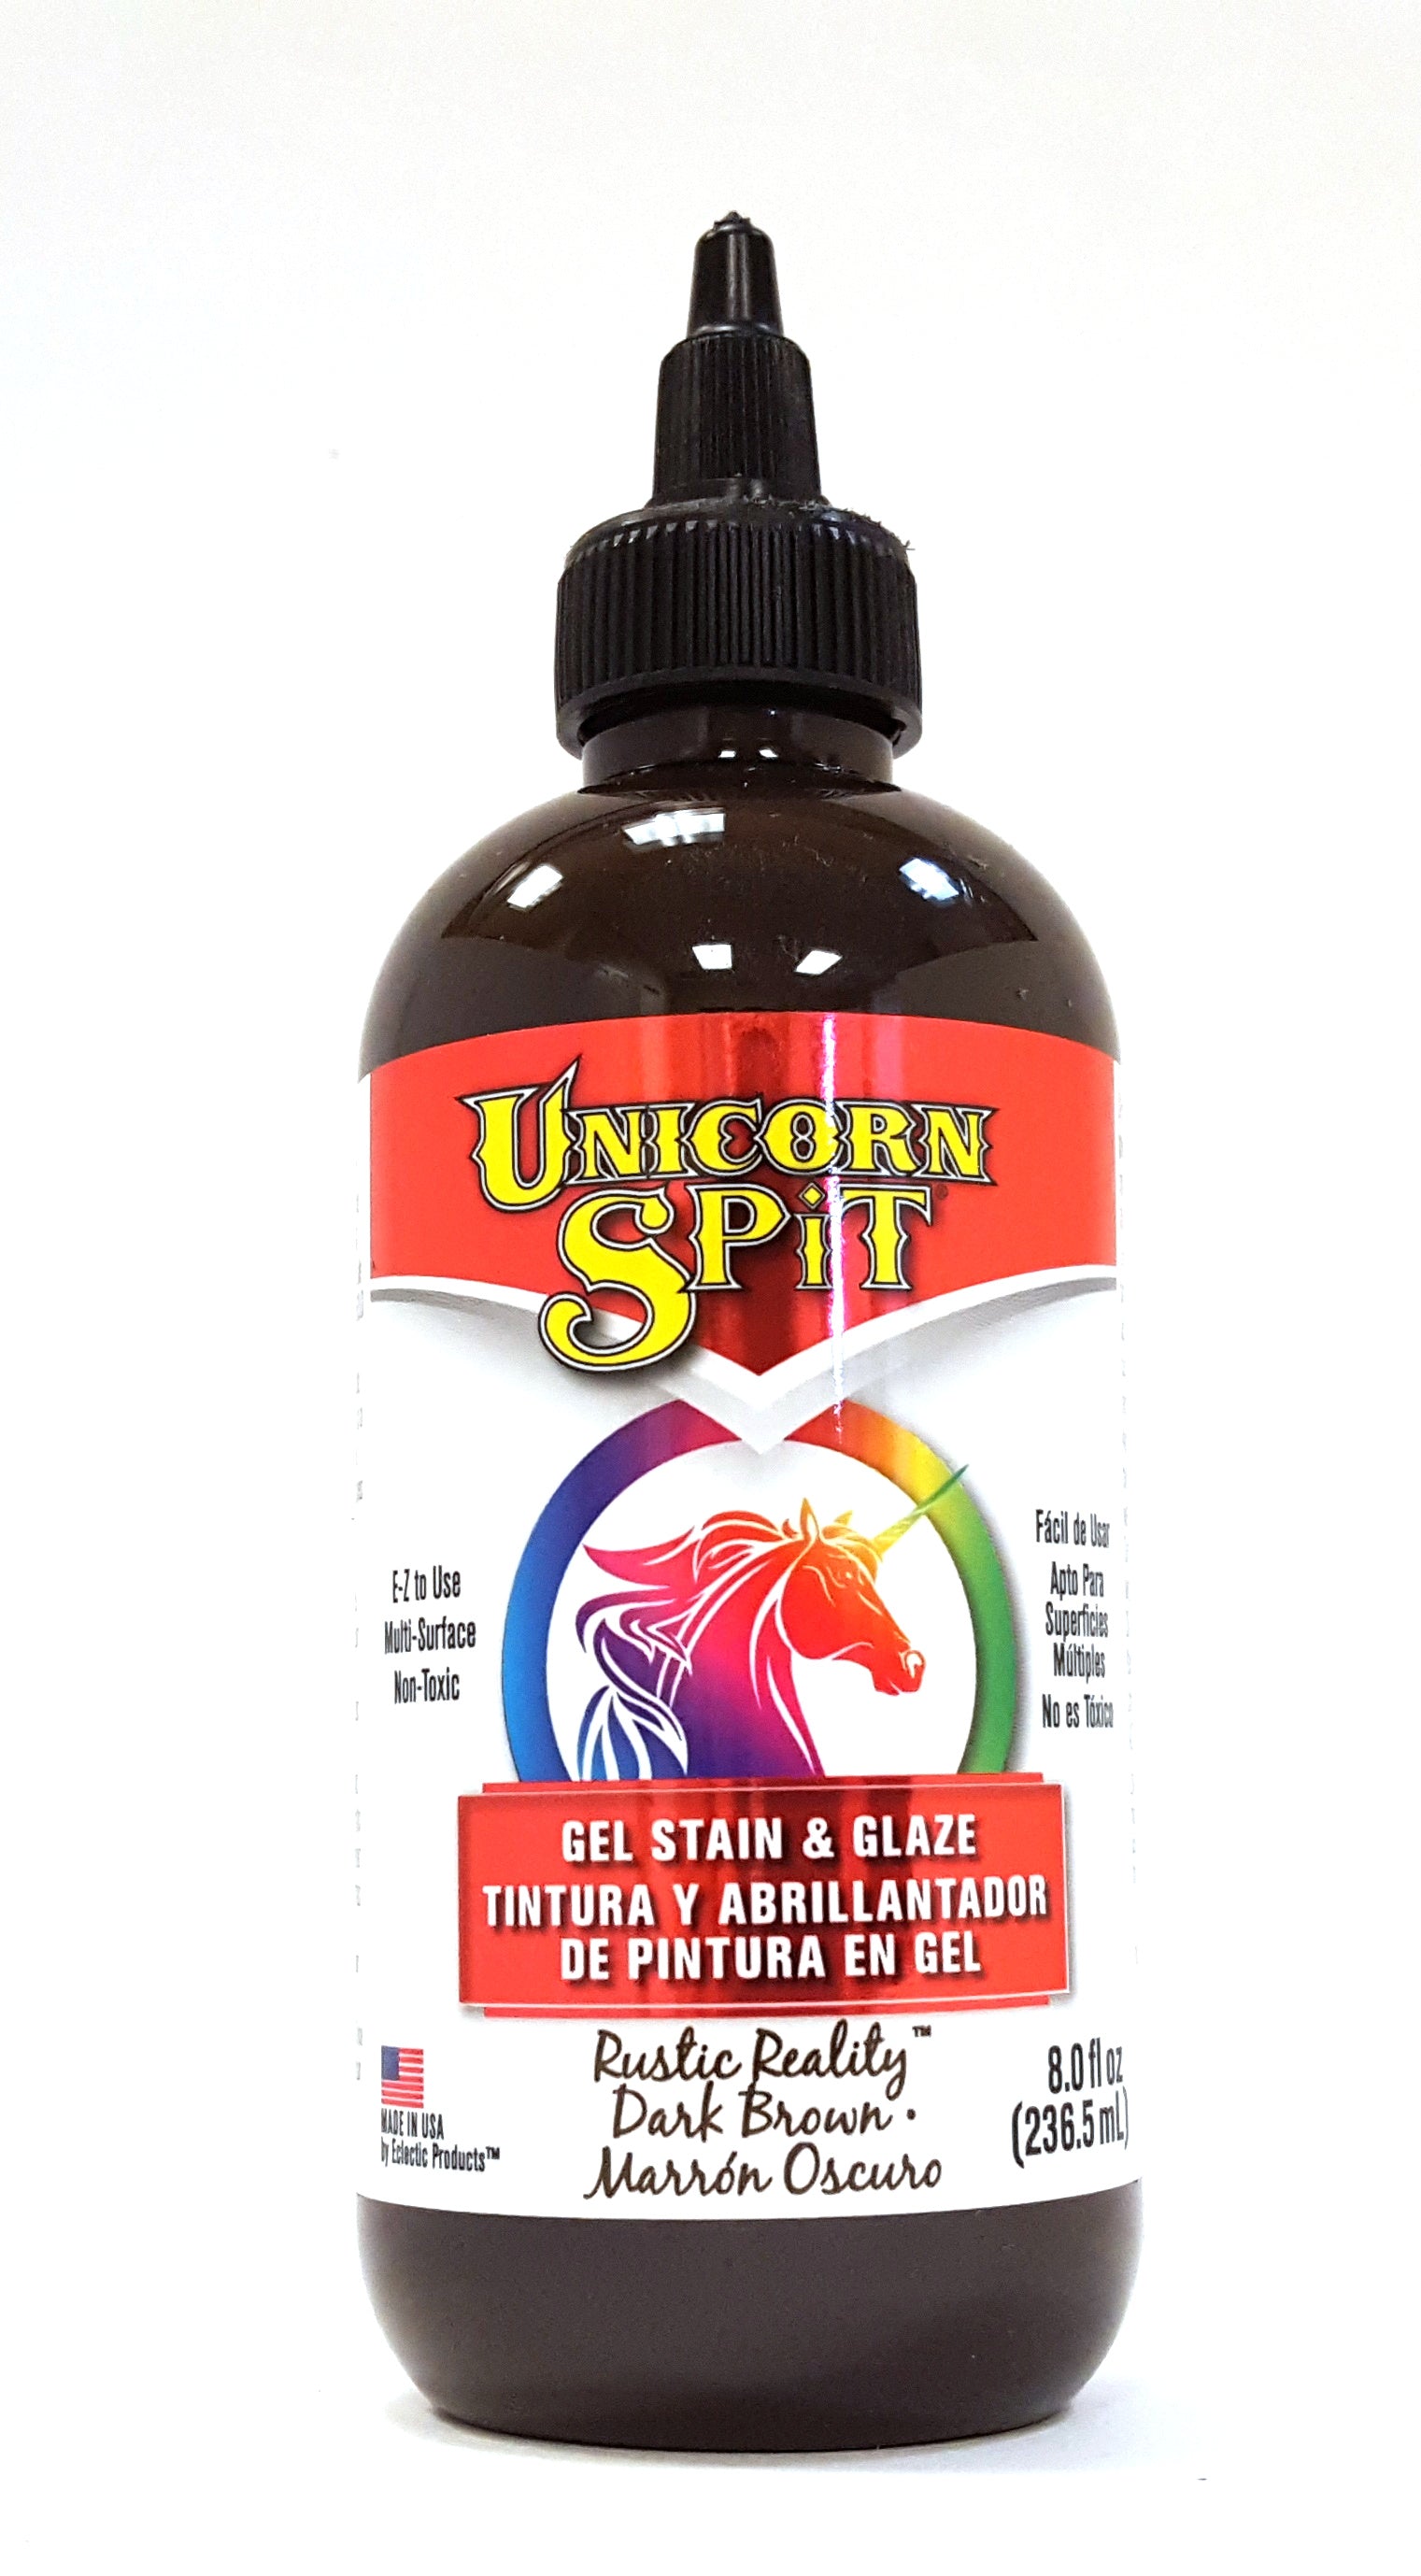 Unicorn Spit Rustic Reality Dark Brown 8 oz 5771012 - Creative Wholesale